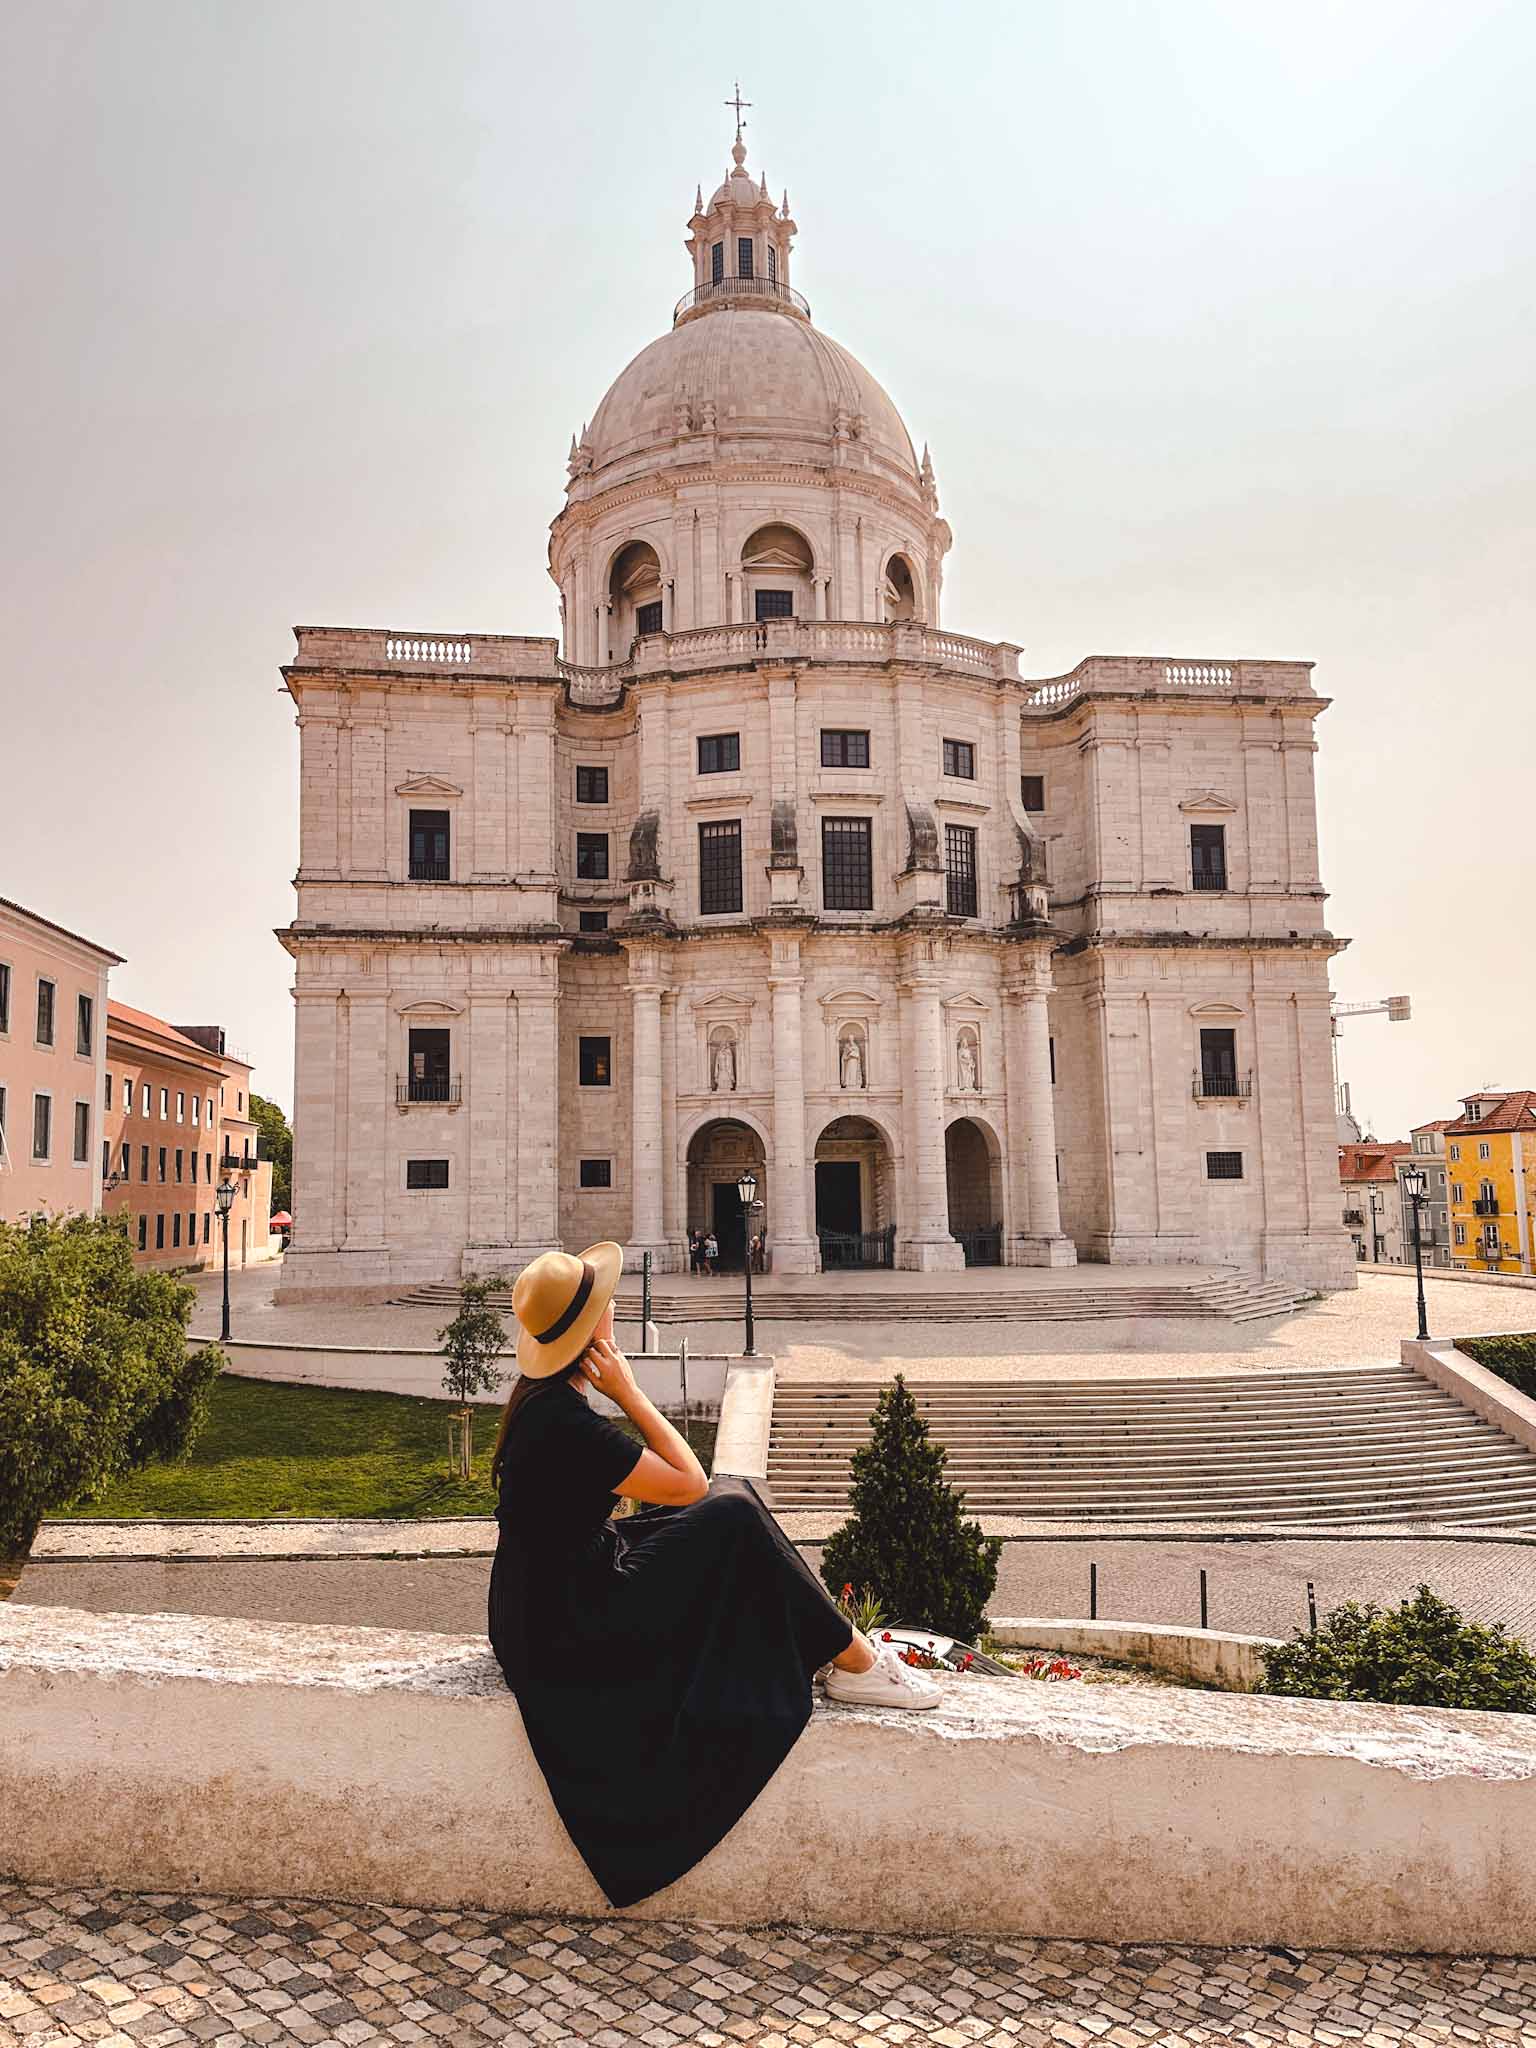 Best Instagram spots in Lisbon - National Pantheon